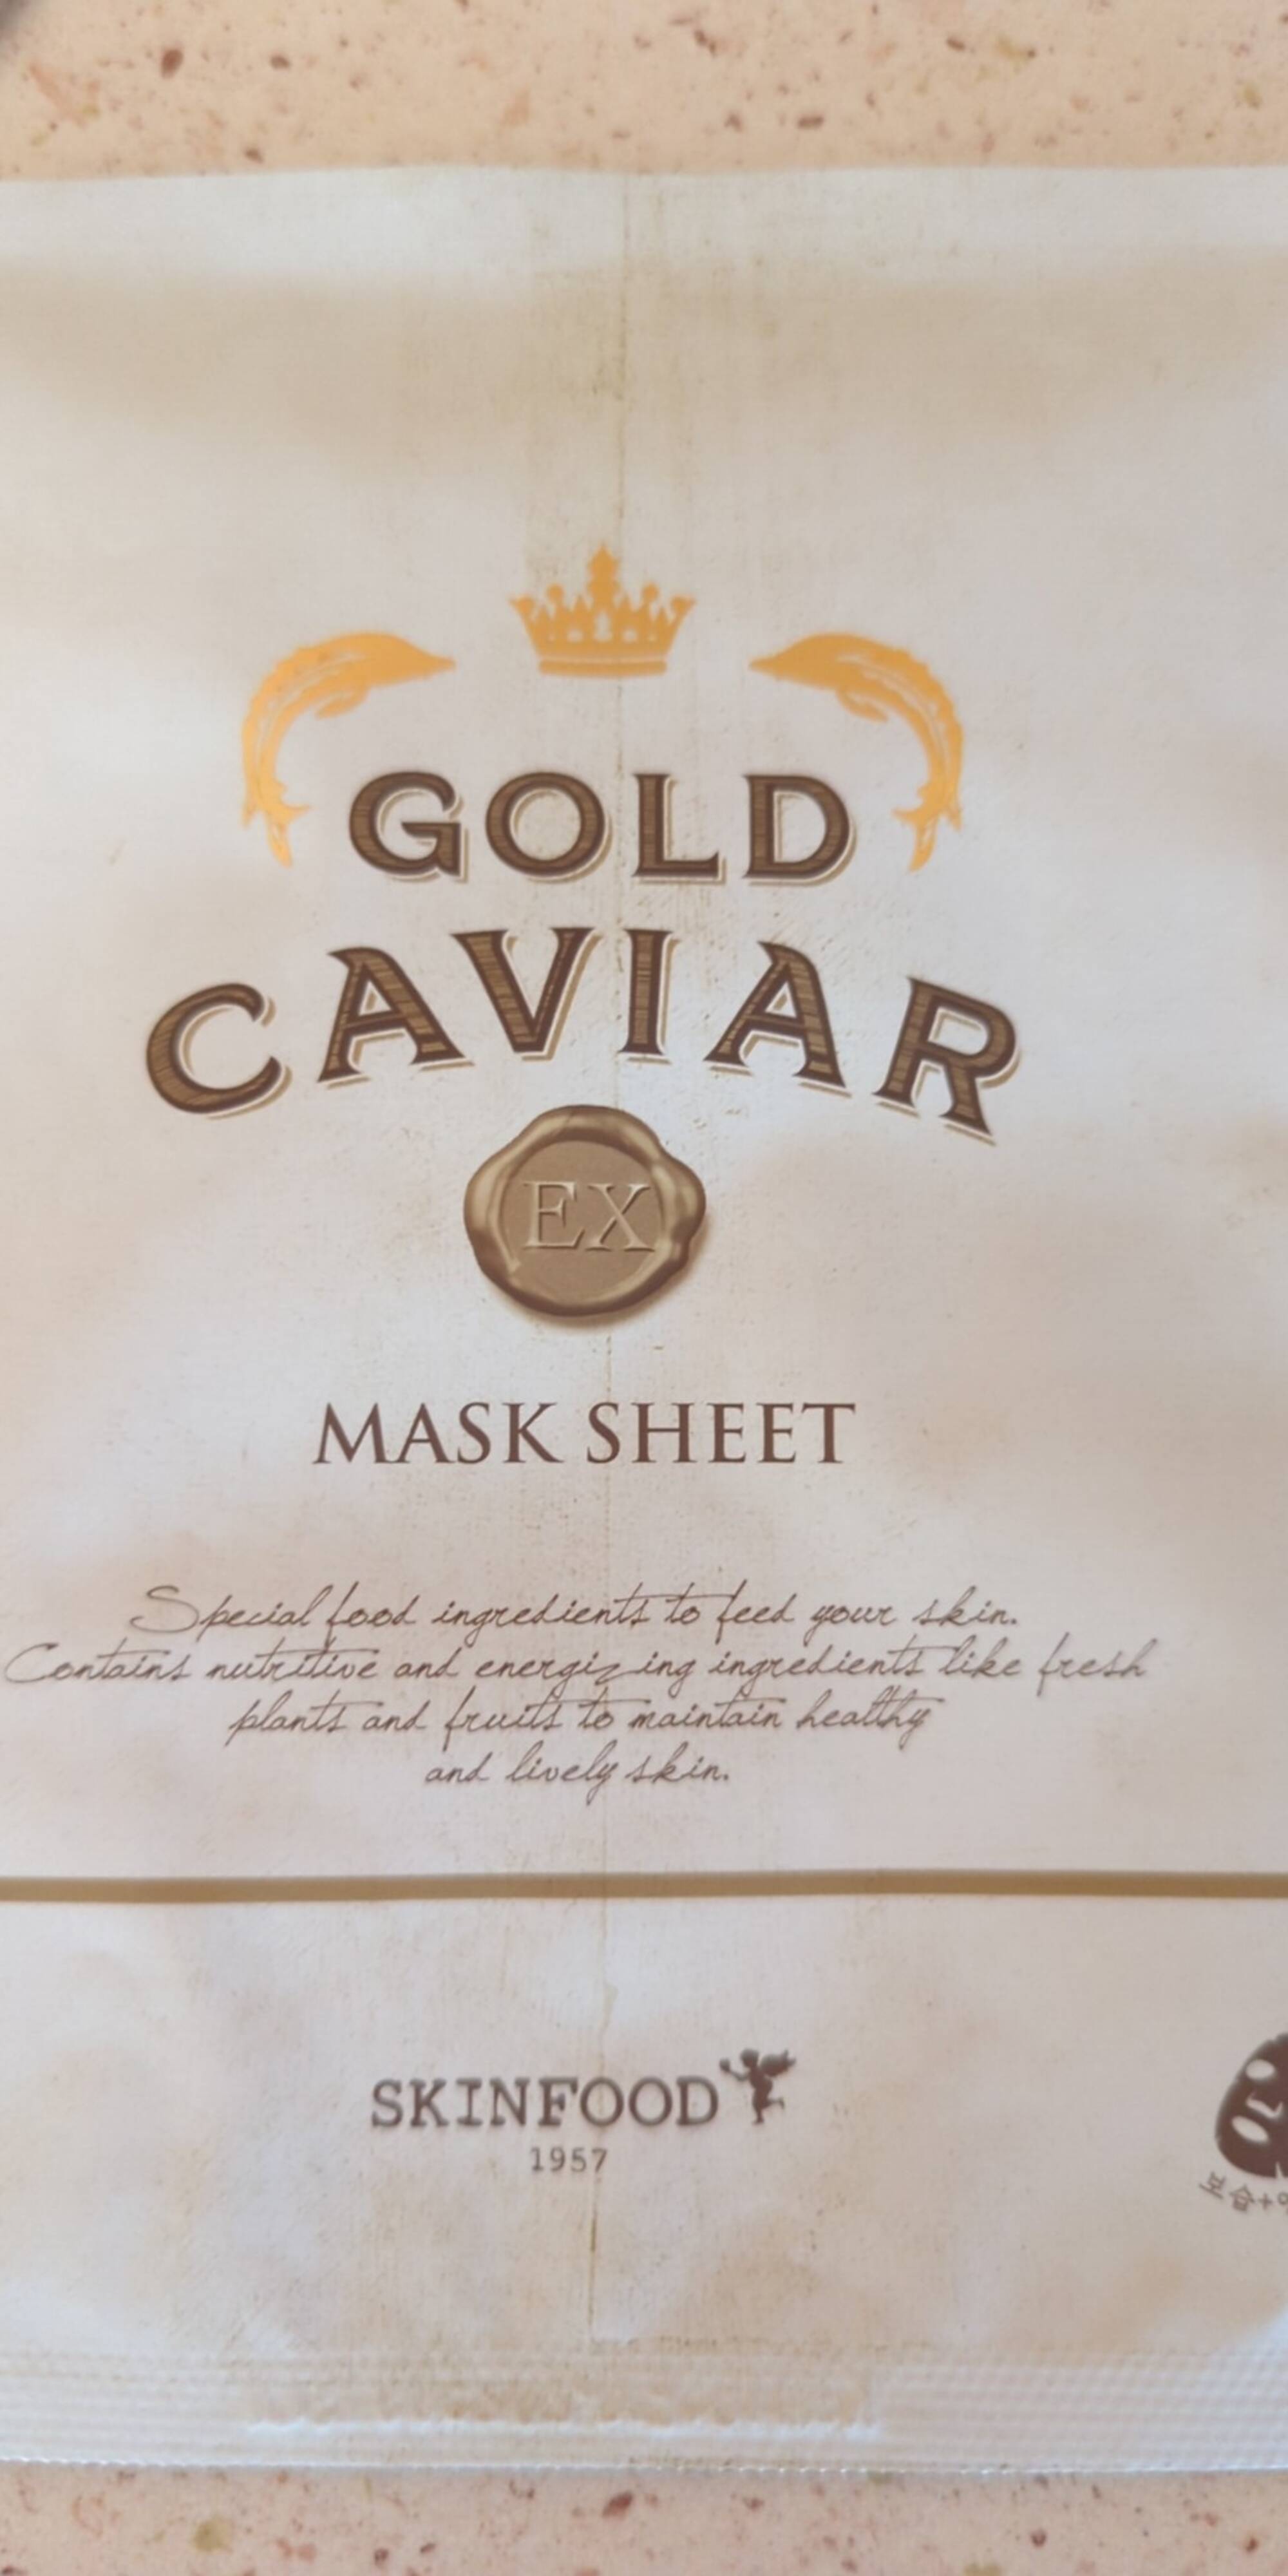 SKINFOOD - Gold caviar - Mask sheet